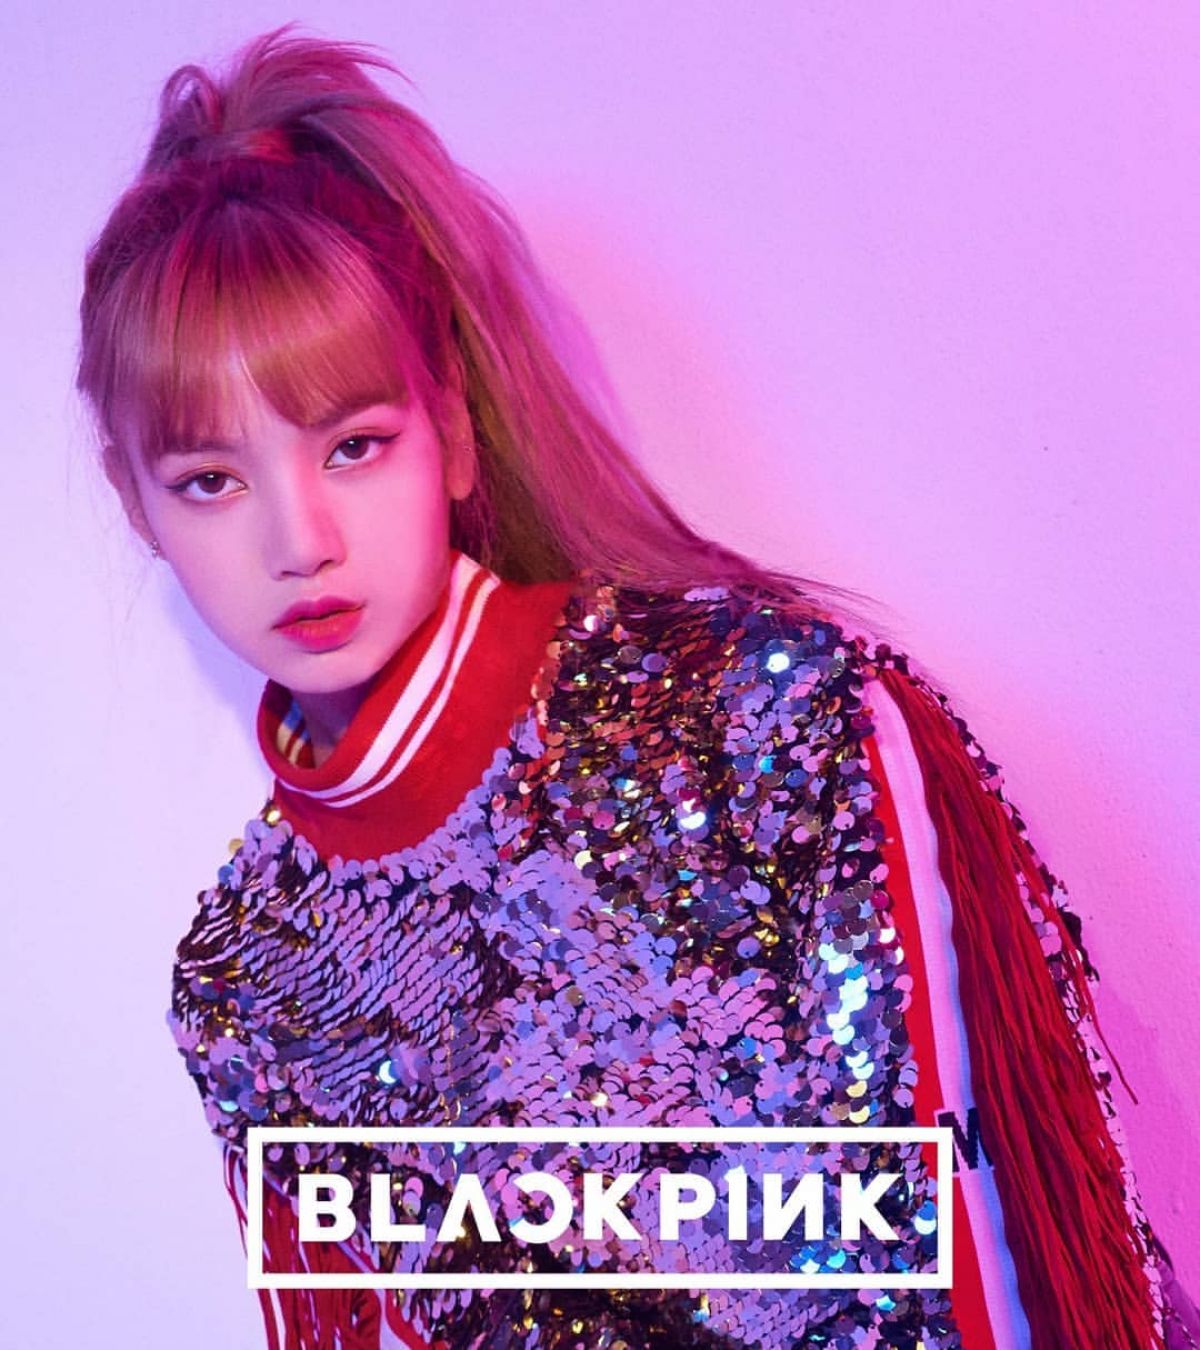 BLACKPINK Blackpink in Your Area Album  Teaser 2022 